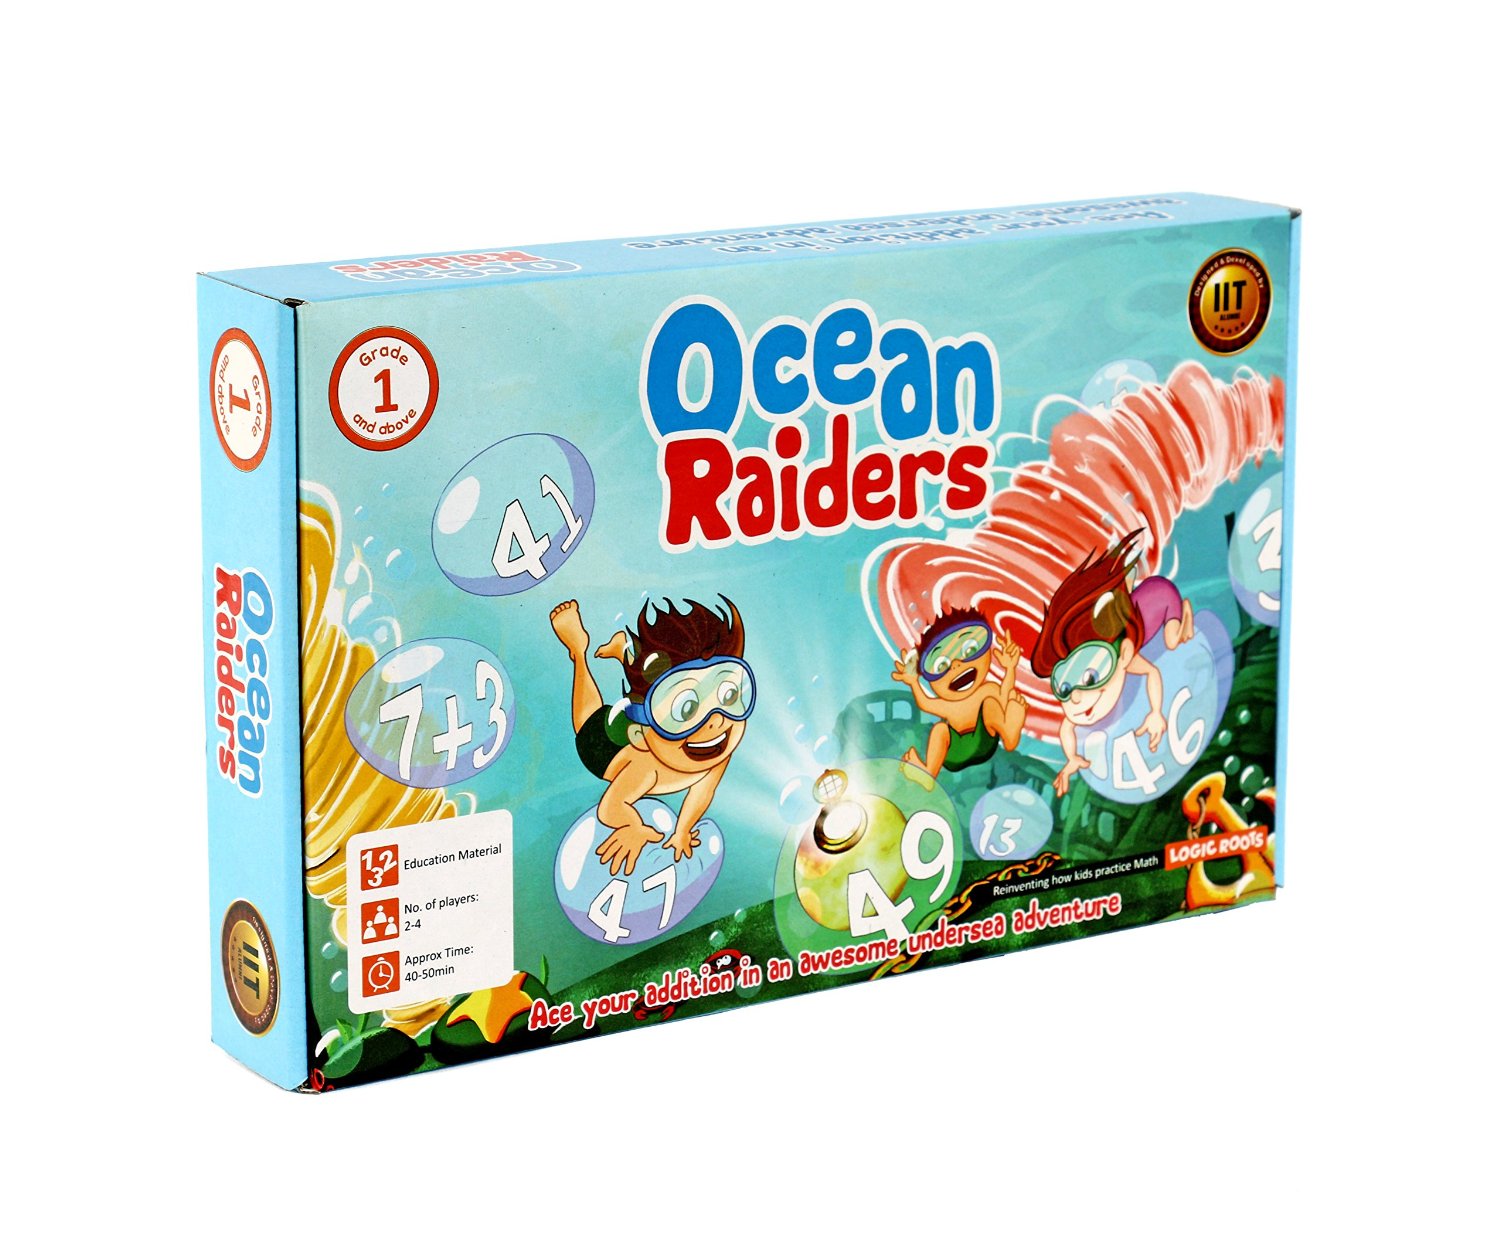 Ocean Raiders addition math facts game